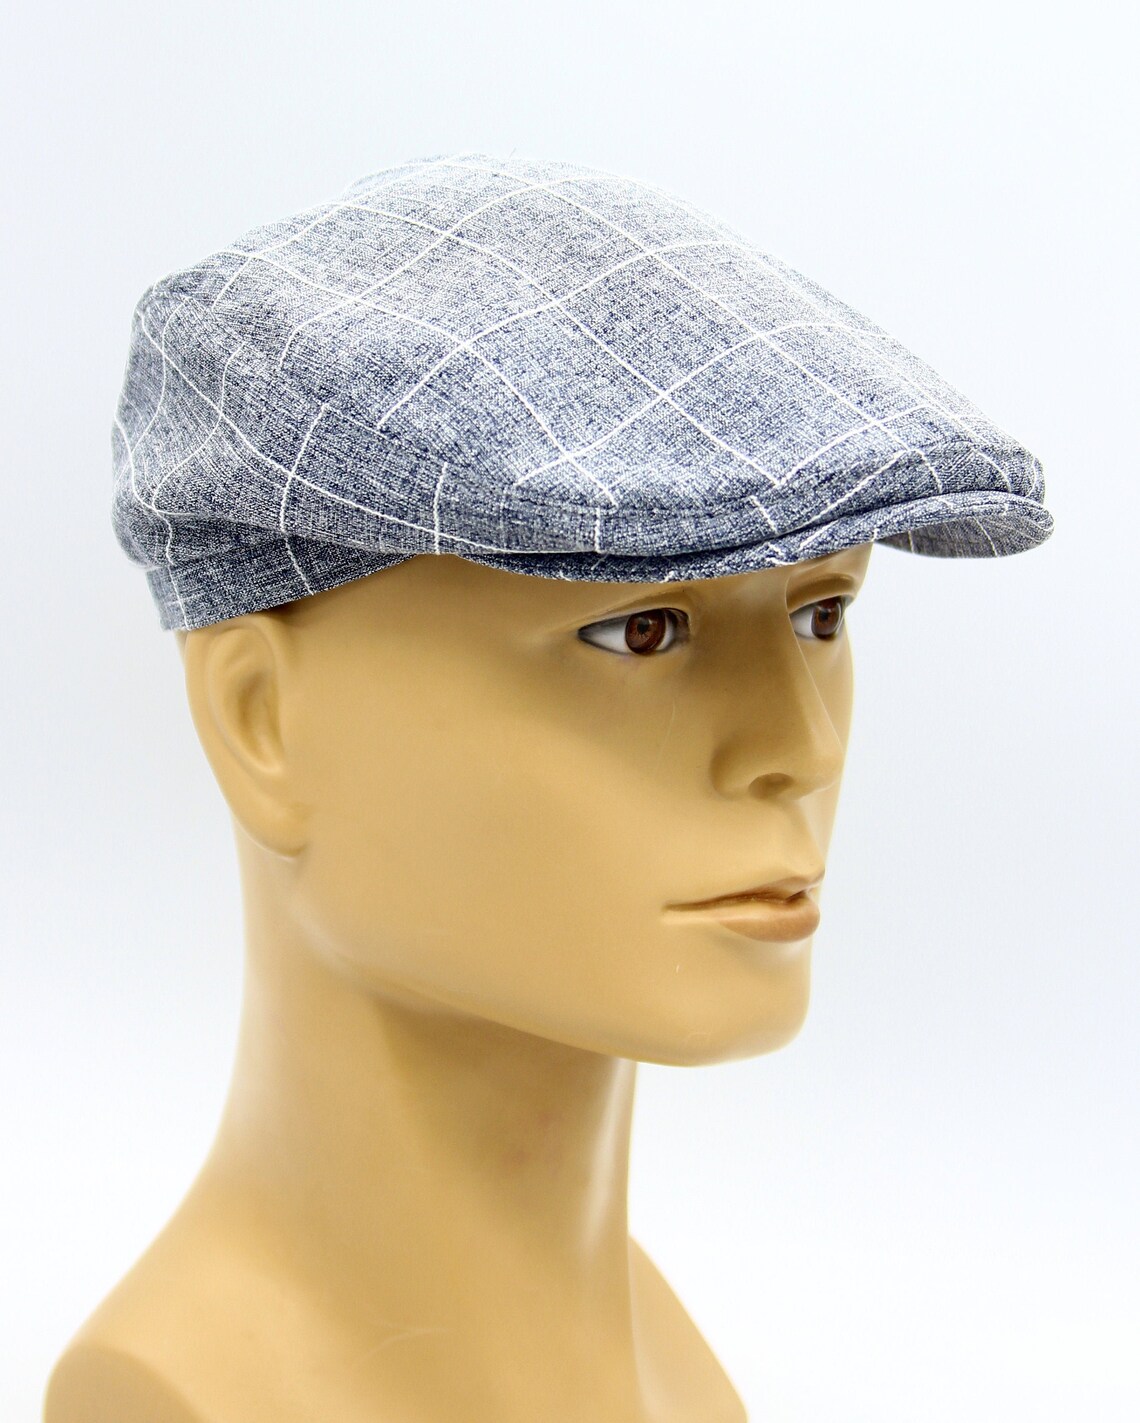 Men's summer cap linen flat cap blue. | Etsy